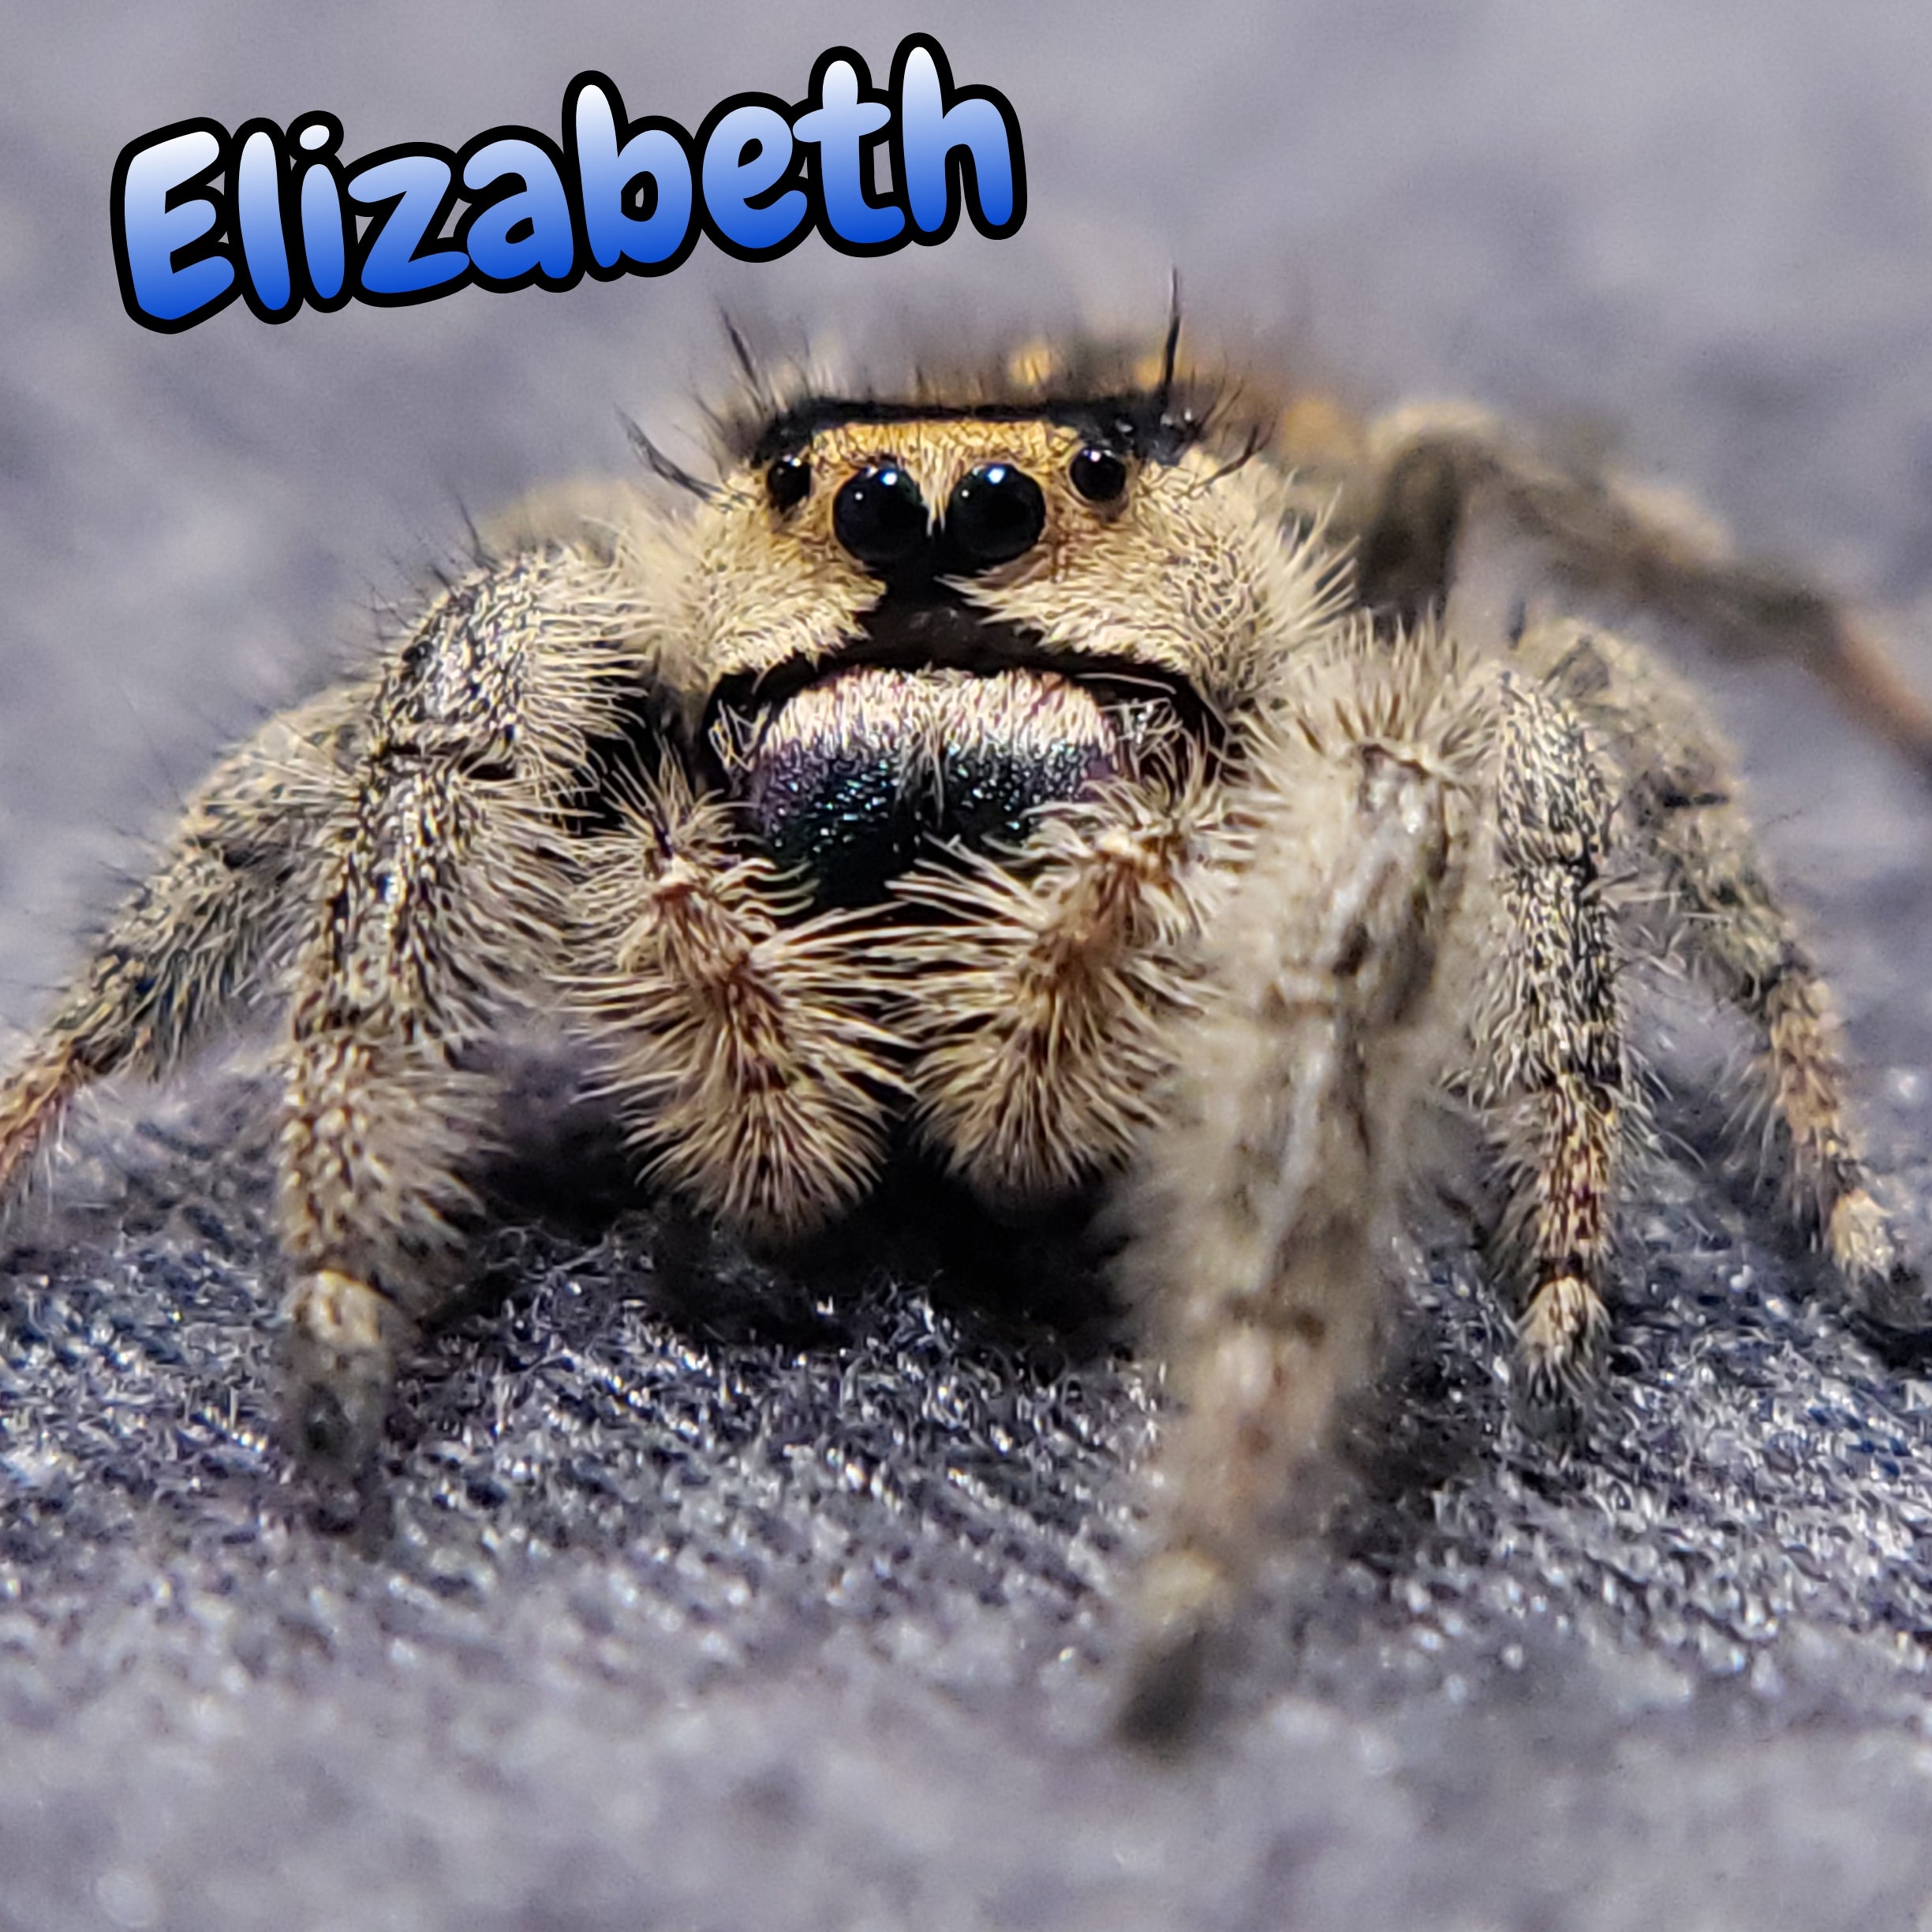 Regal Jumping Spider "Elizabeth"